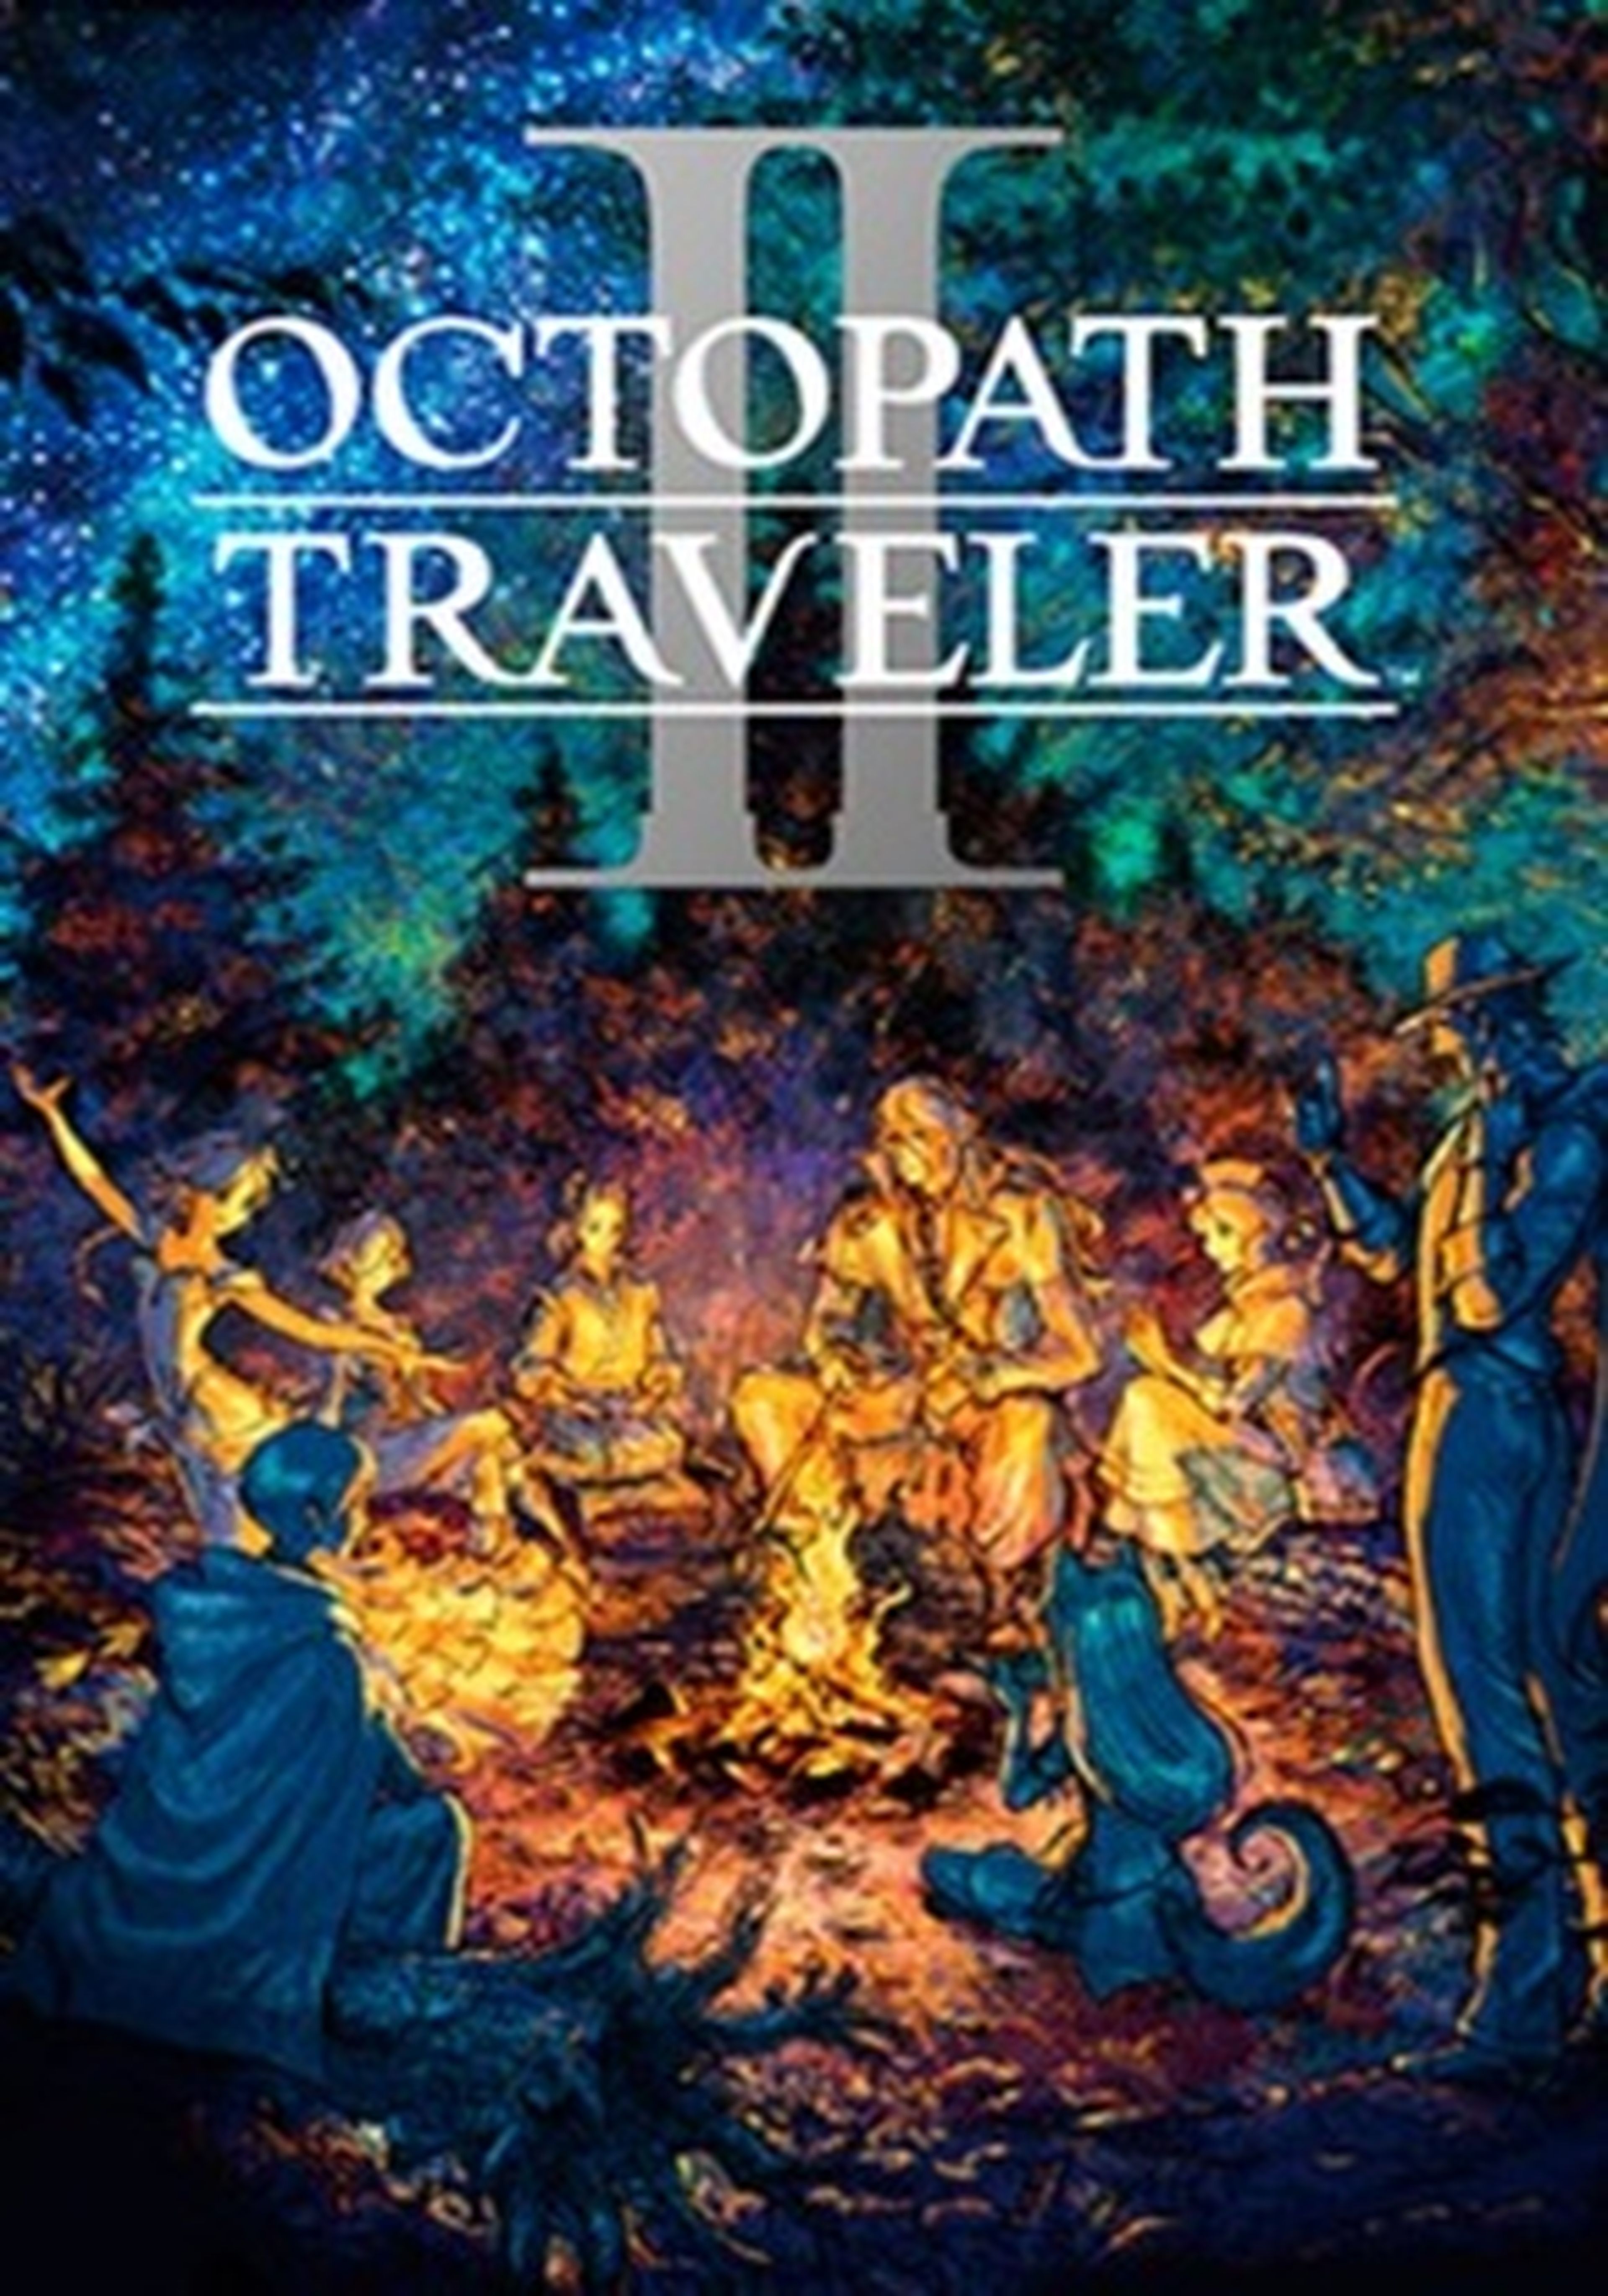 Octopath Traveler II cartel